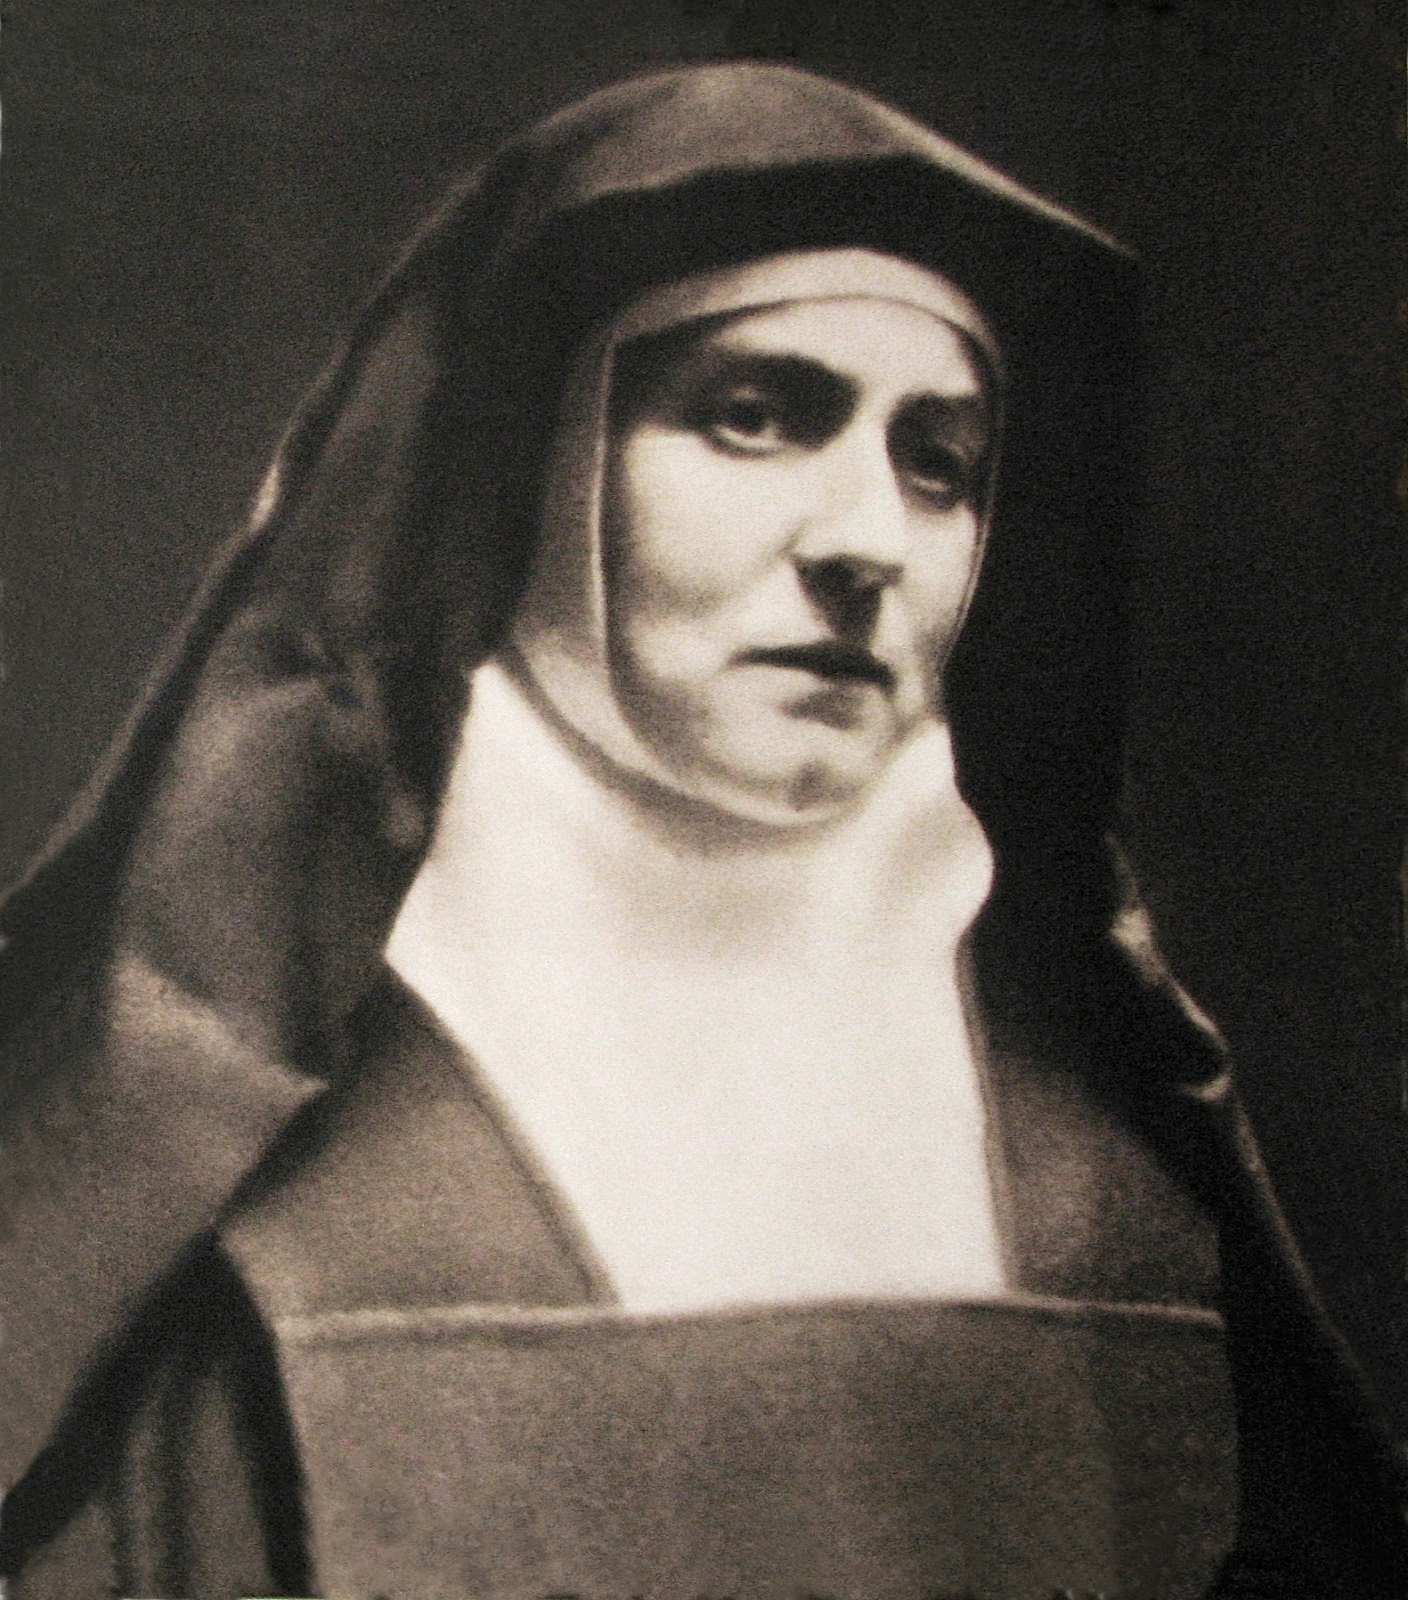 Ordensschwester Teresia Benedicta a Cruce 1939